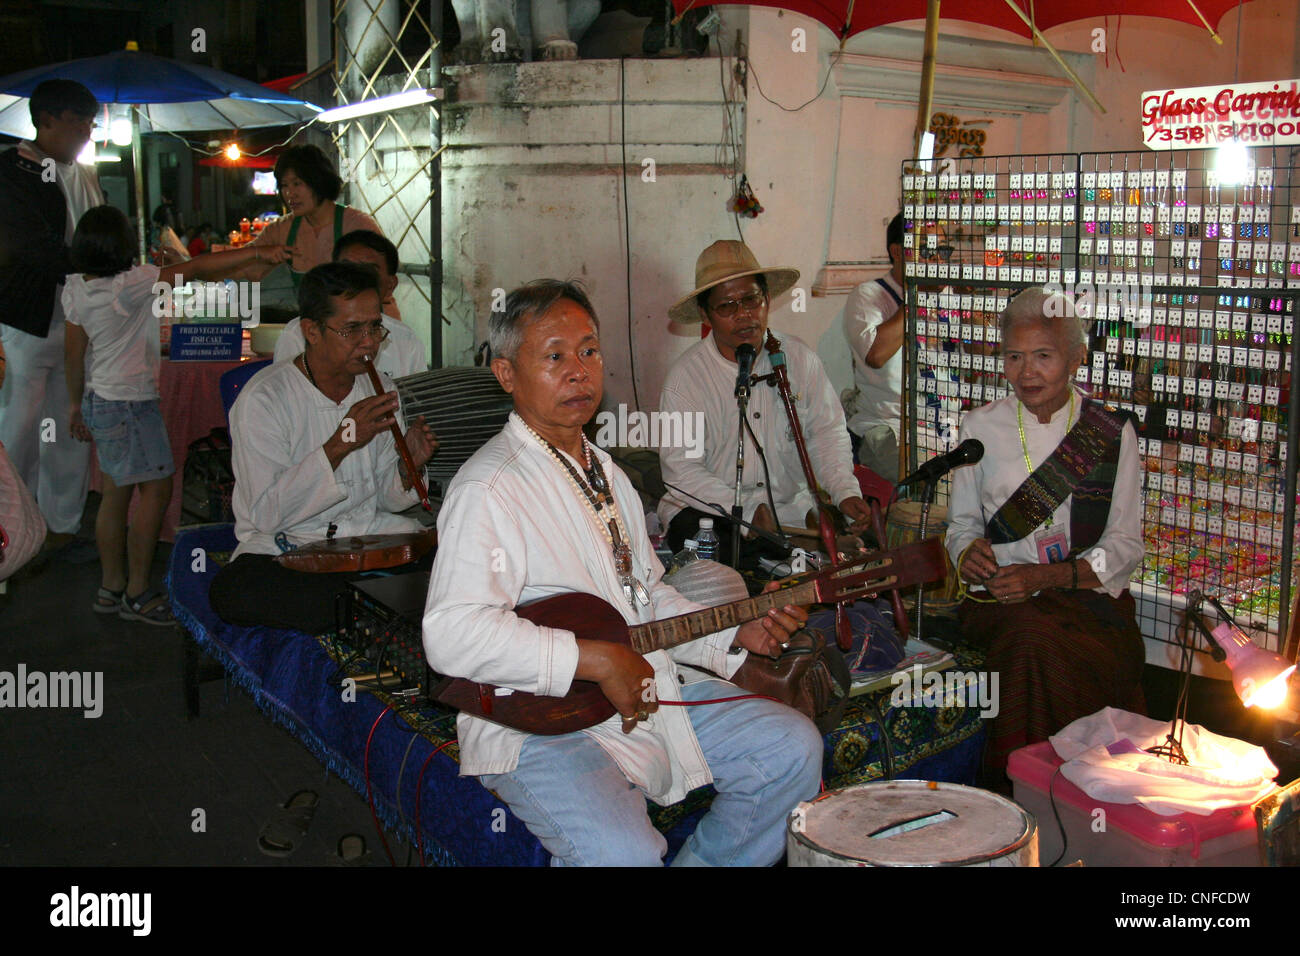 Local Lanna music,traditional instrument on people walk street, tanon rachdumnean, Stock Photo